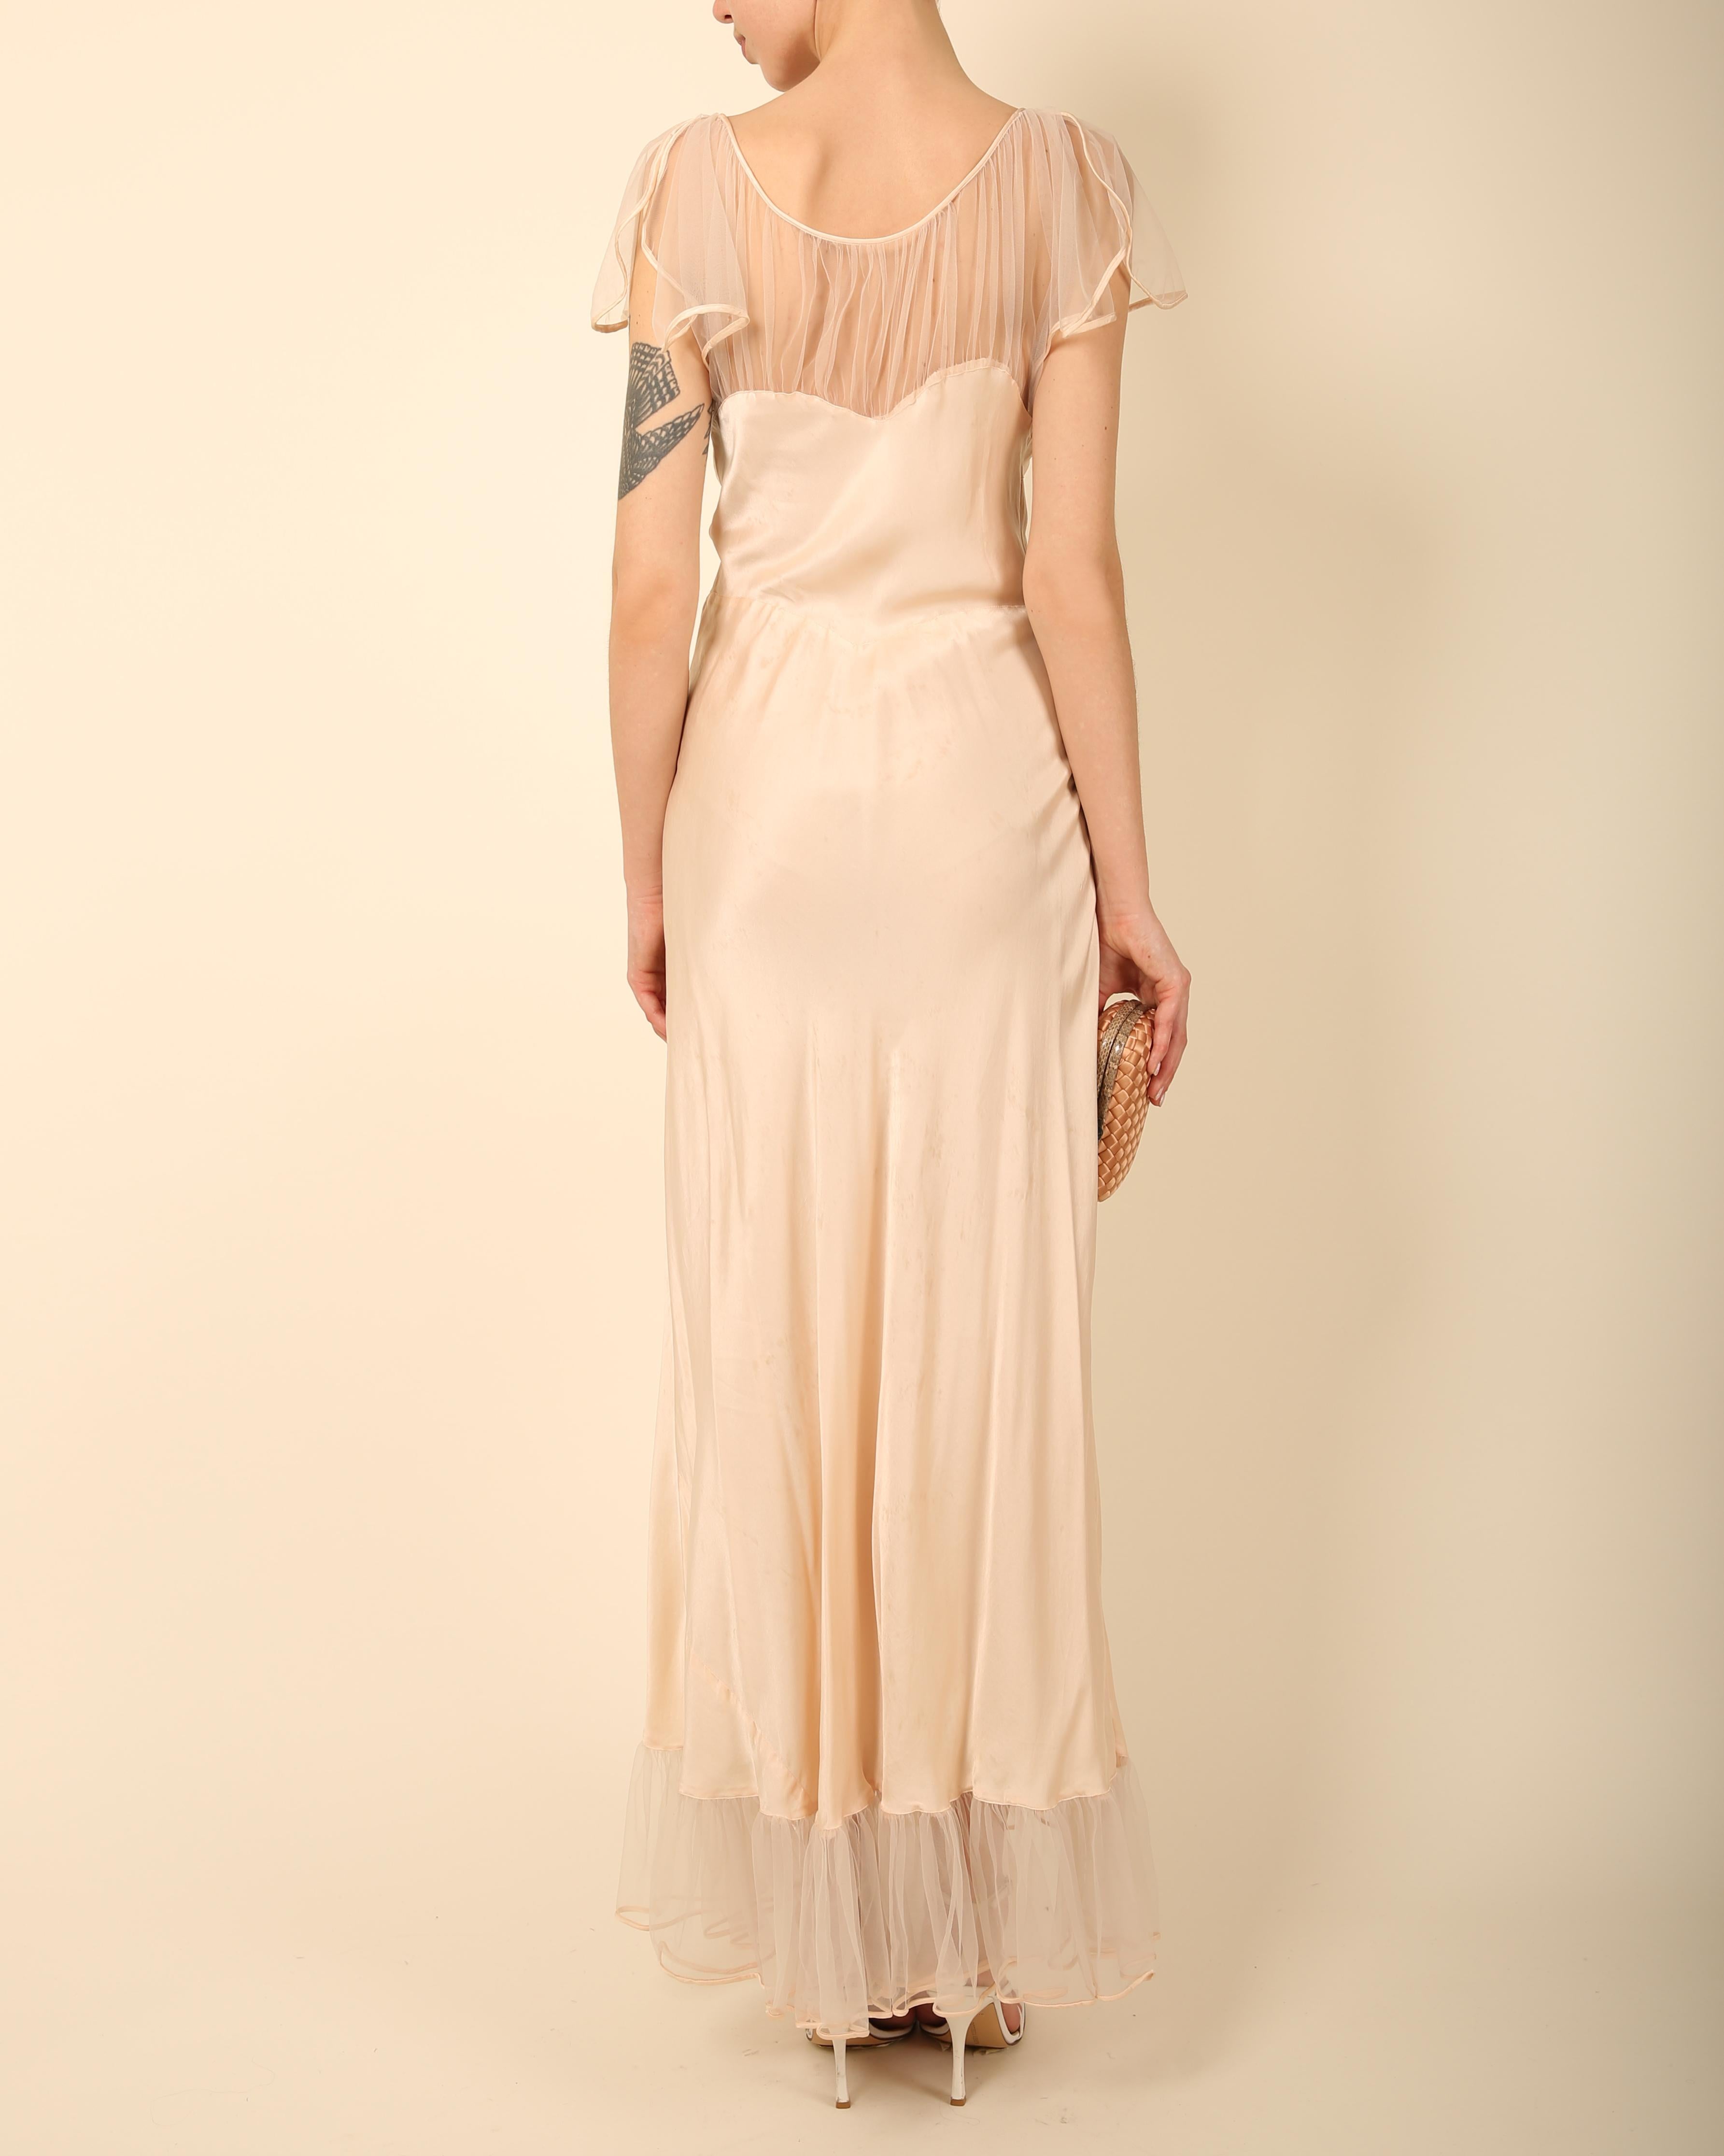 Vintage pink lace floral sheer silk ruffle nightgown robe bias maxi slip dress 5